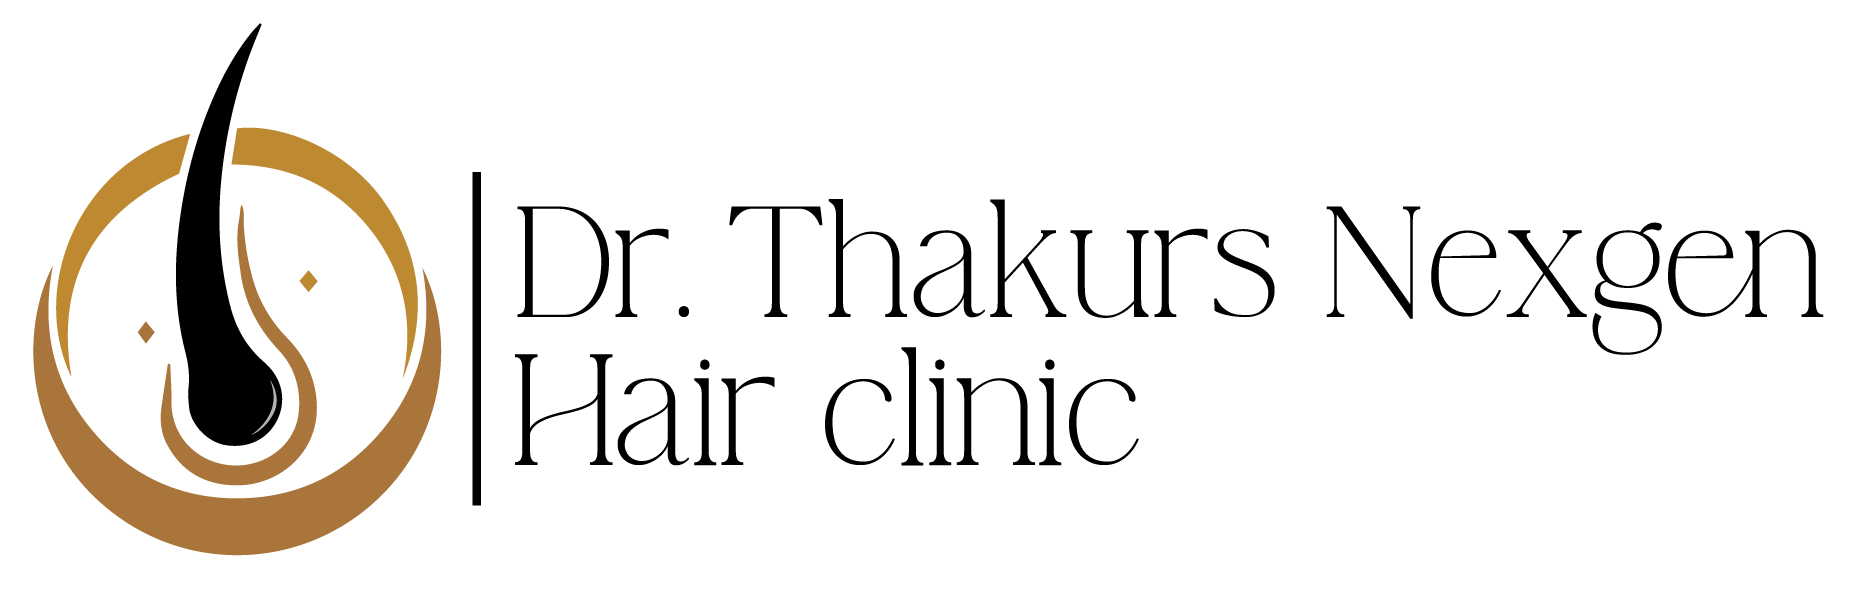 Hair Care Website Template